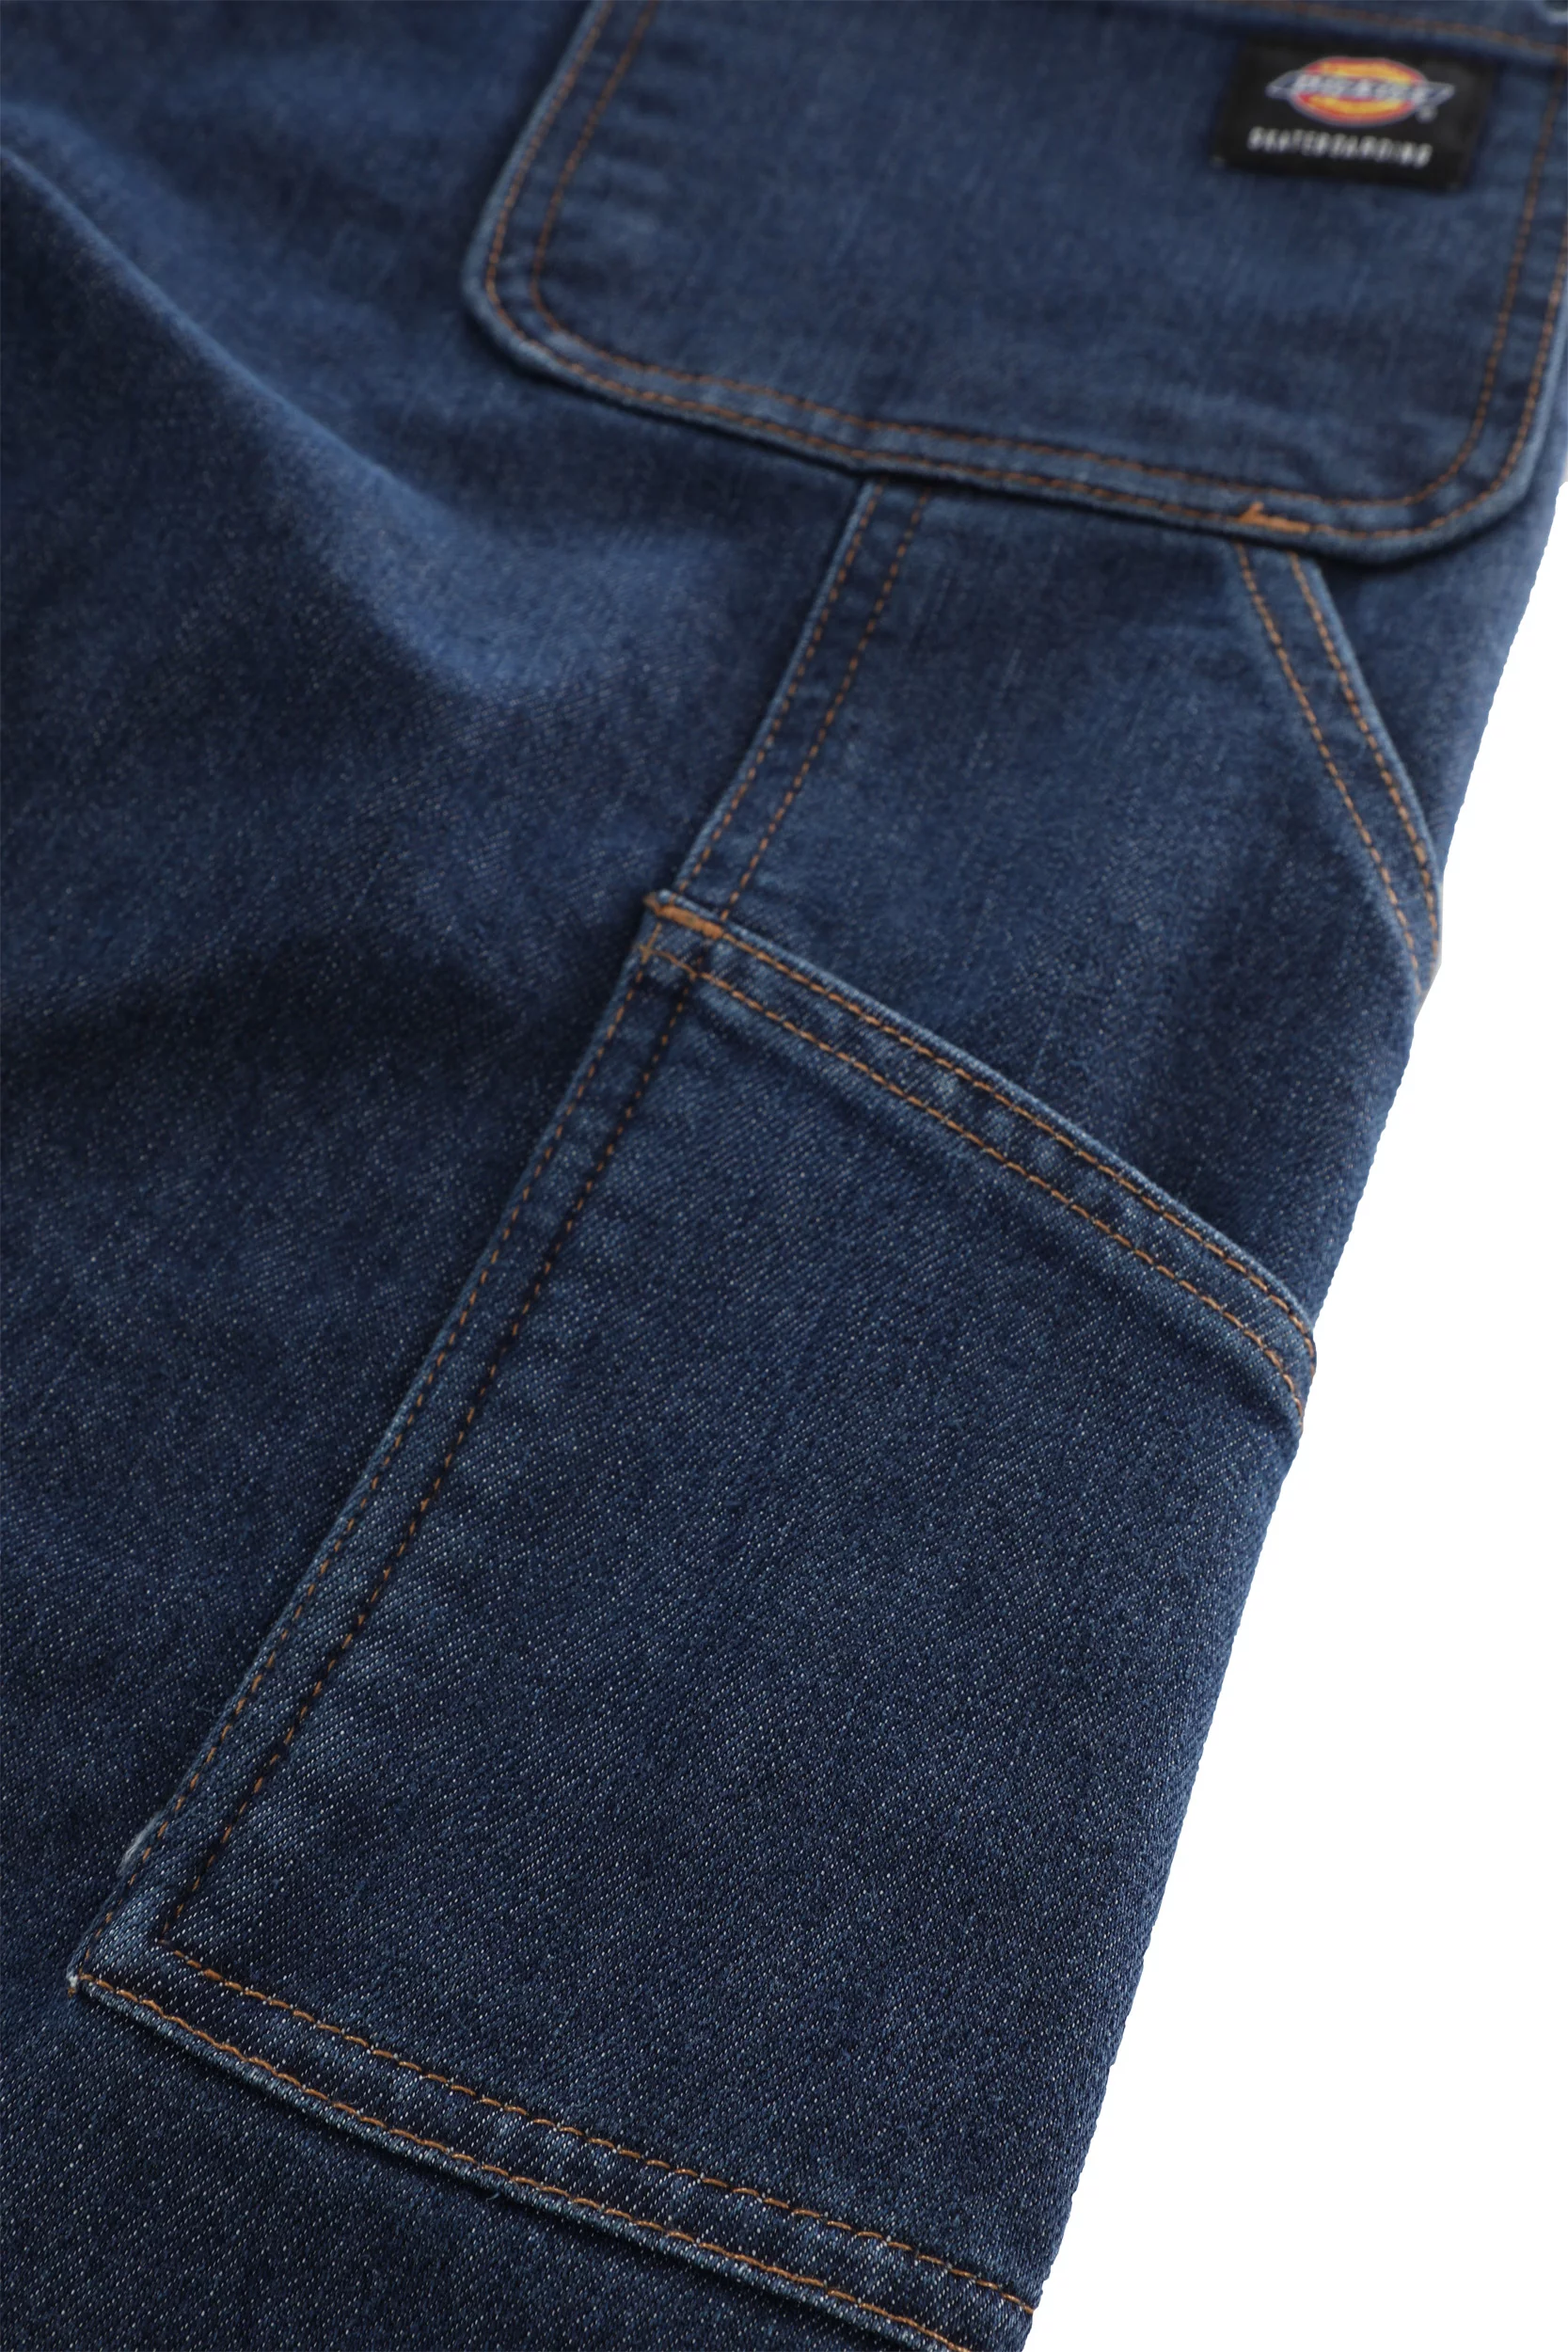 Dickies Regular Fit Utility Denim Jeans - stone washed indigo